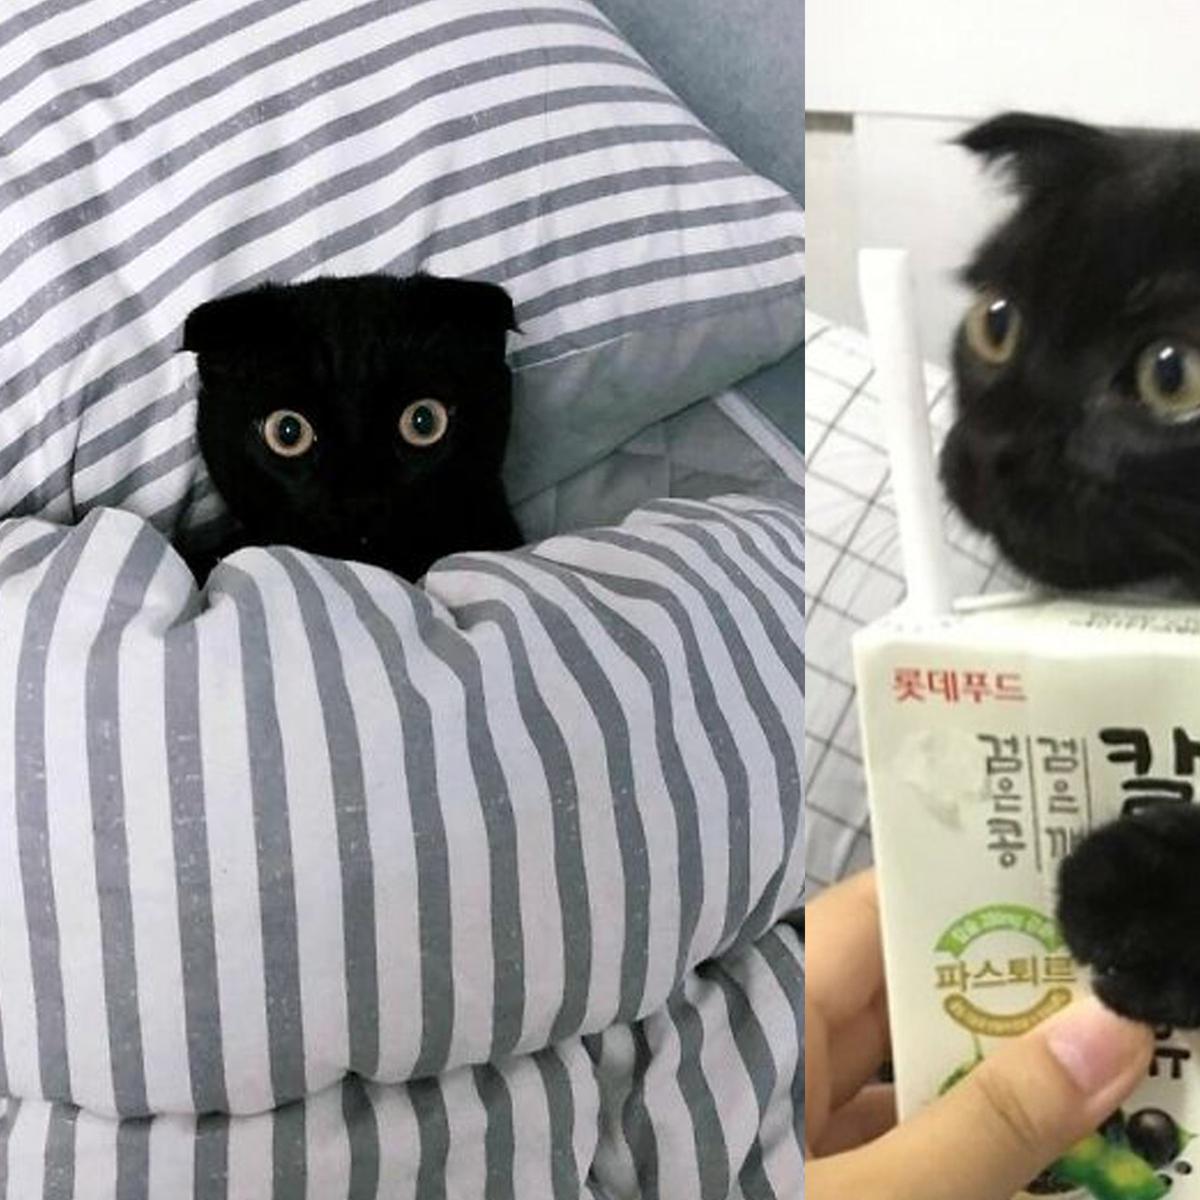 Kucing hitam meme